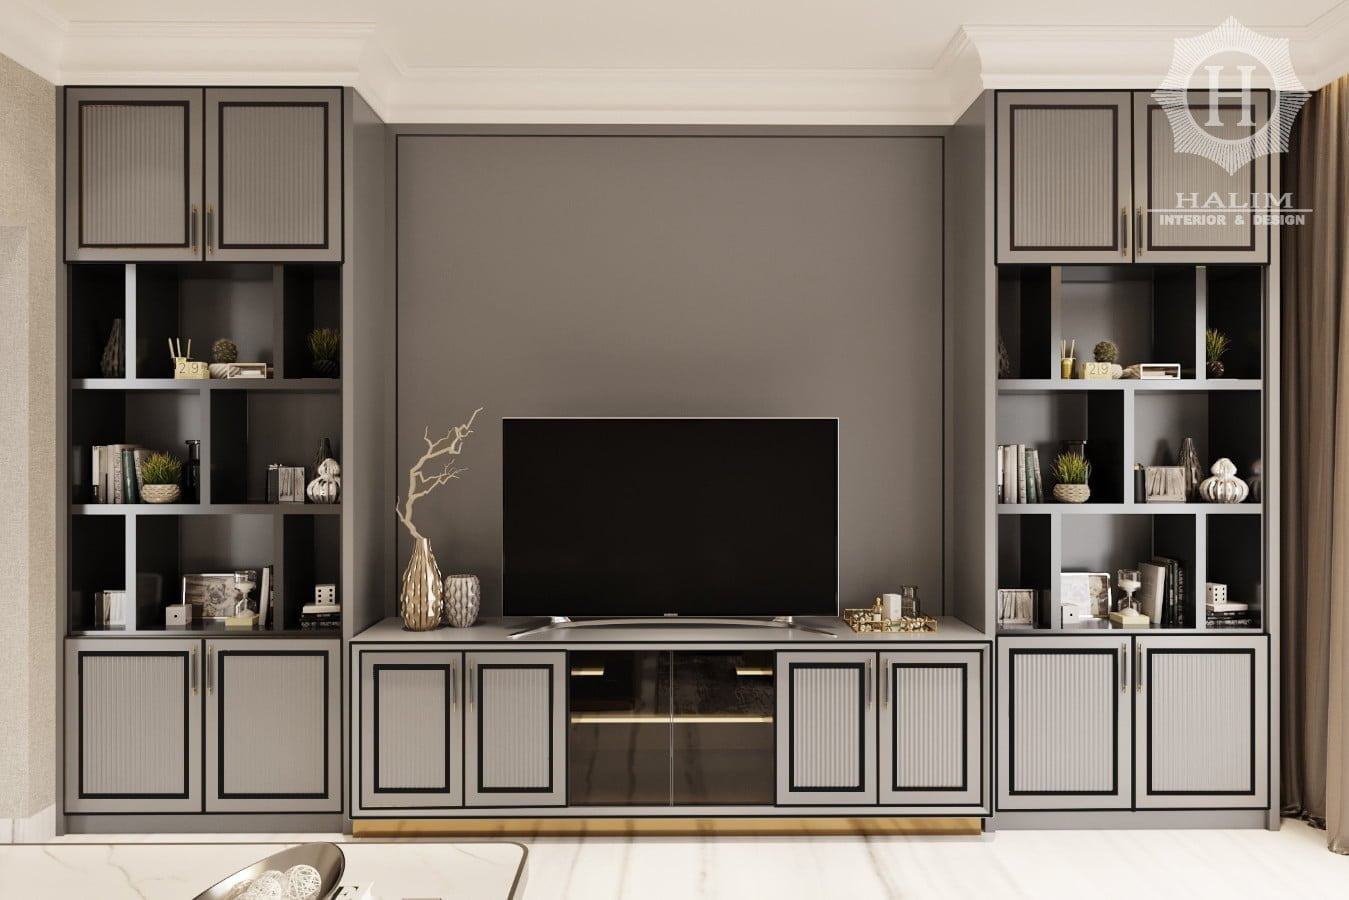 Halim Interior modern furniture contemporer american style minimalist european classic surabaya 65.PUNCAK PERMAI